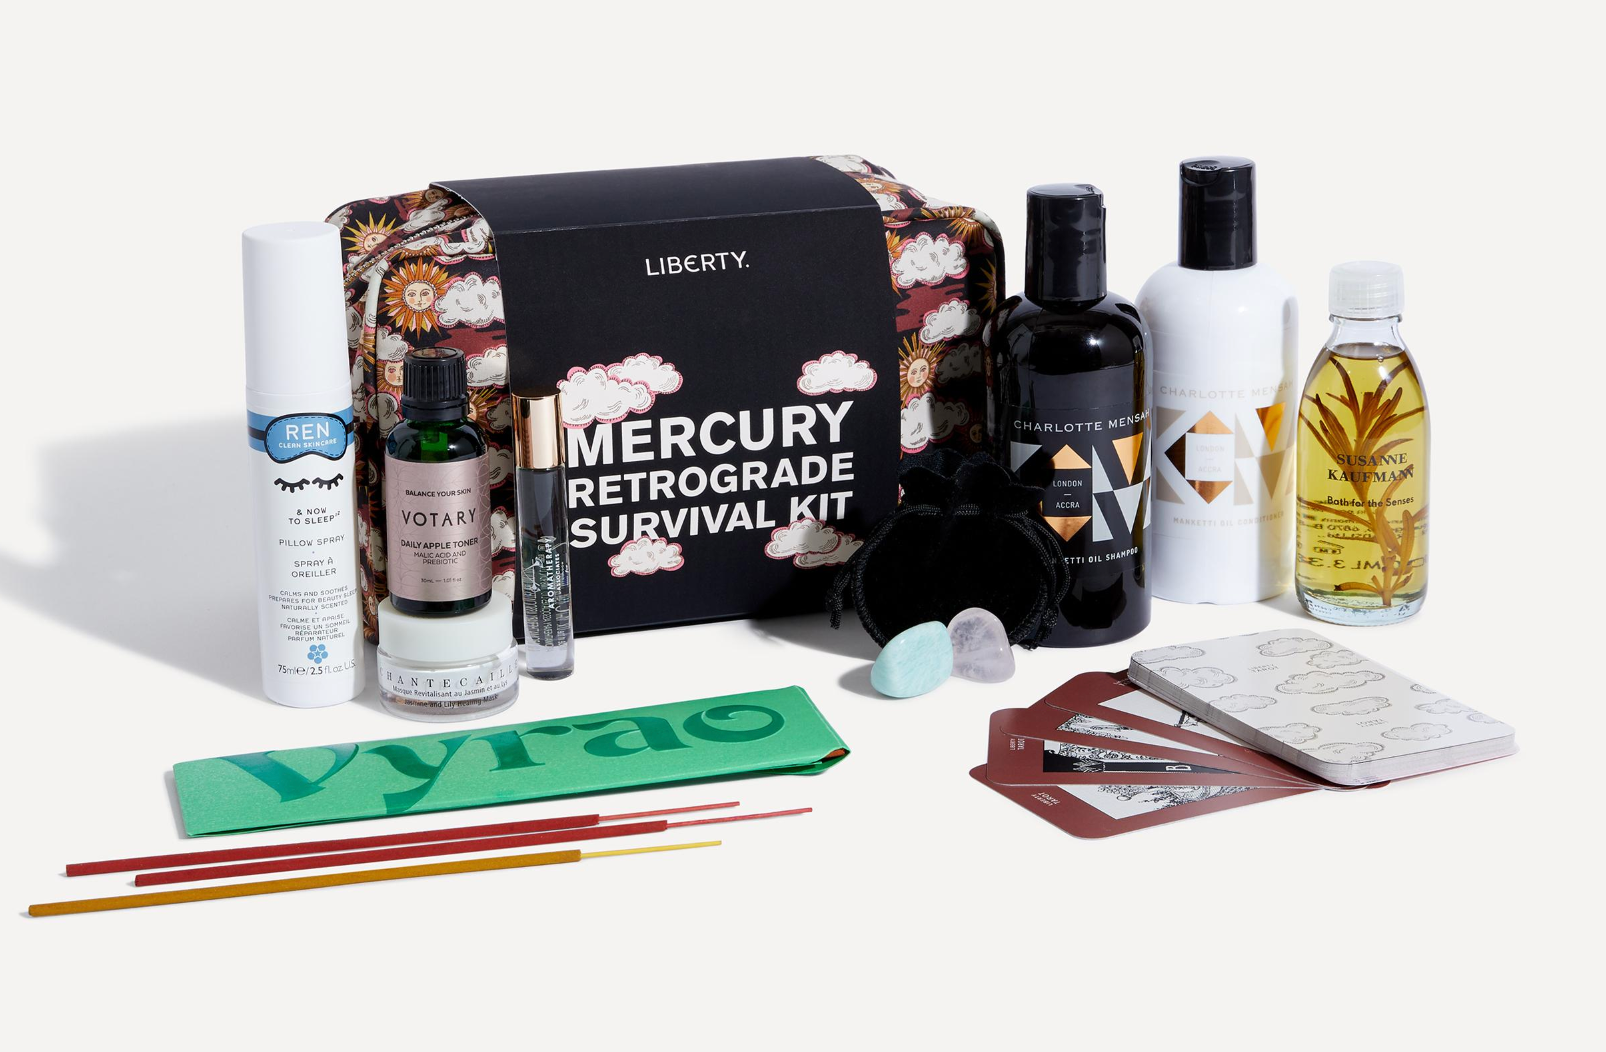 Liberty mercury retrograde kit